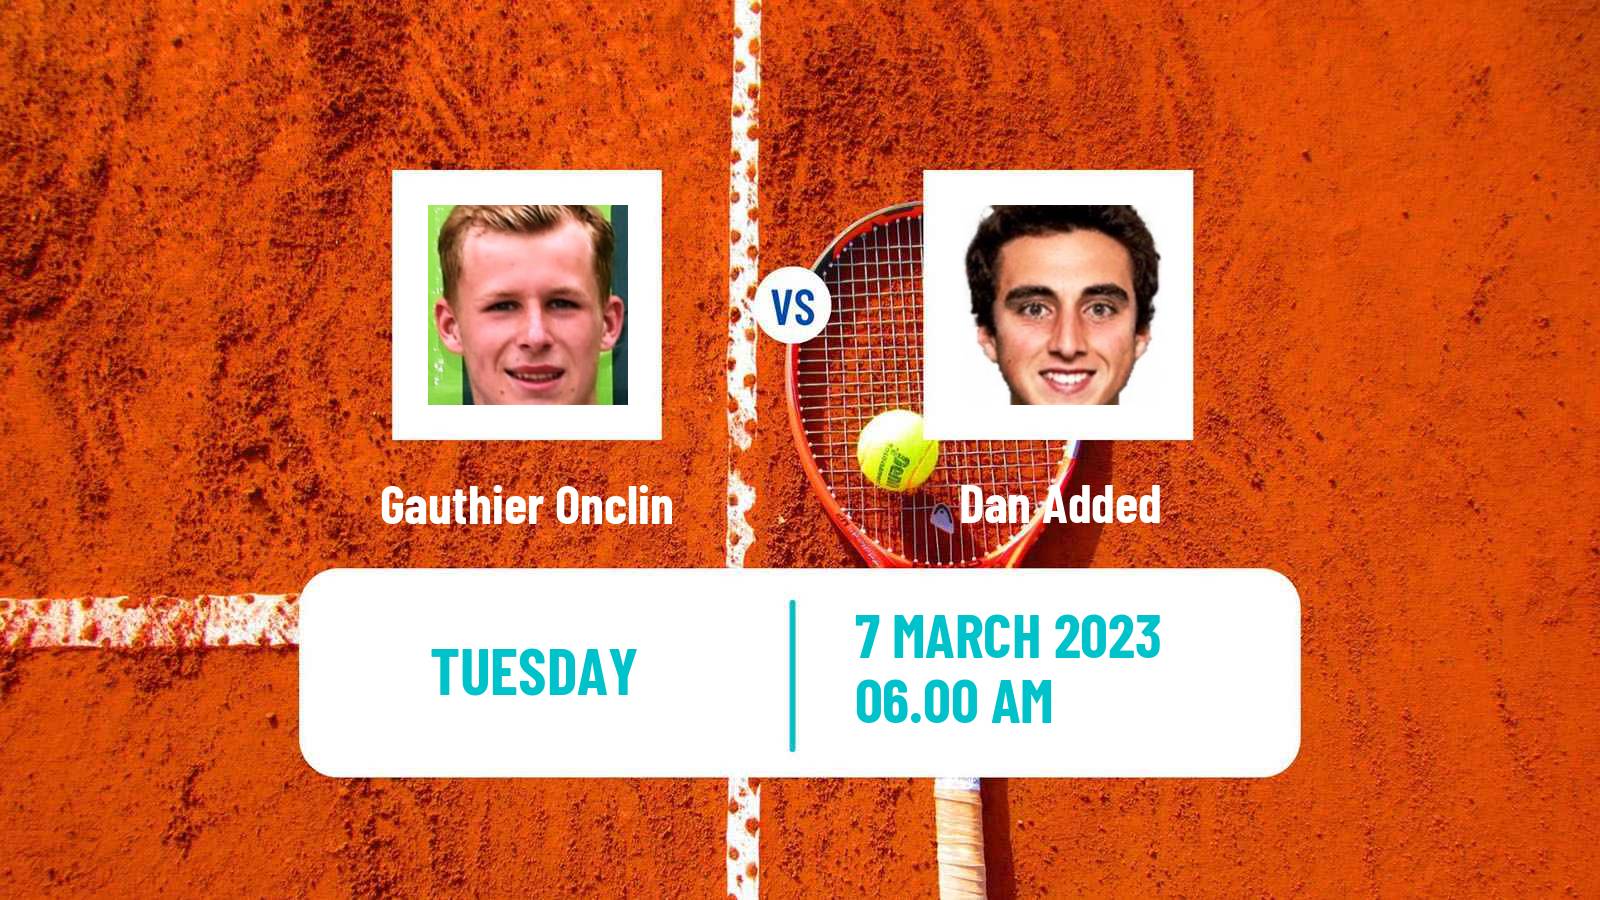 Tennis ATP Challenger Gauthier Onclin - Dan Added